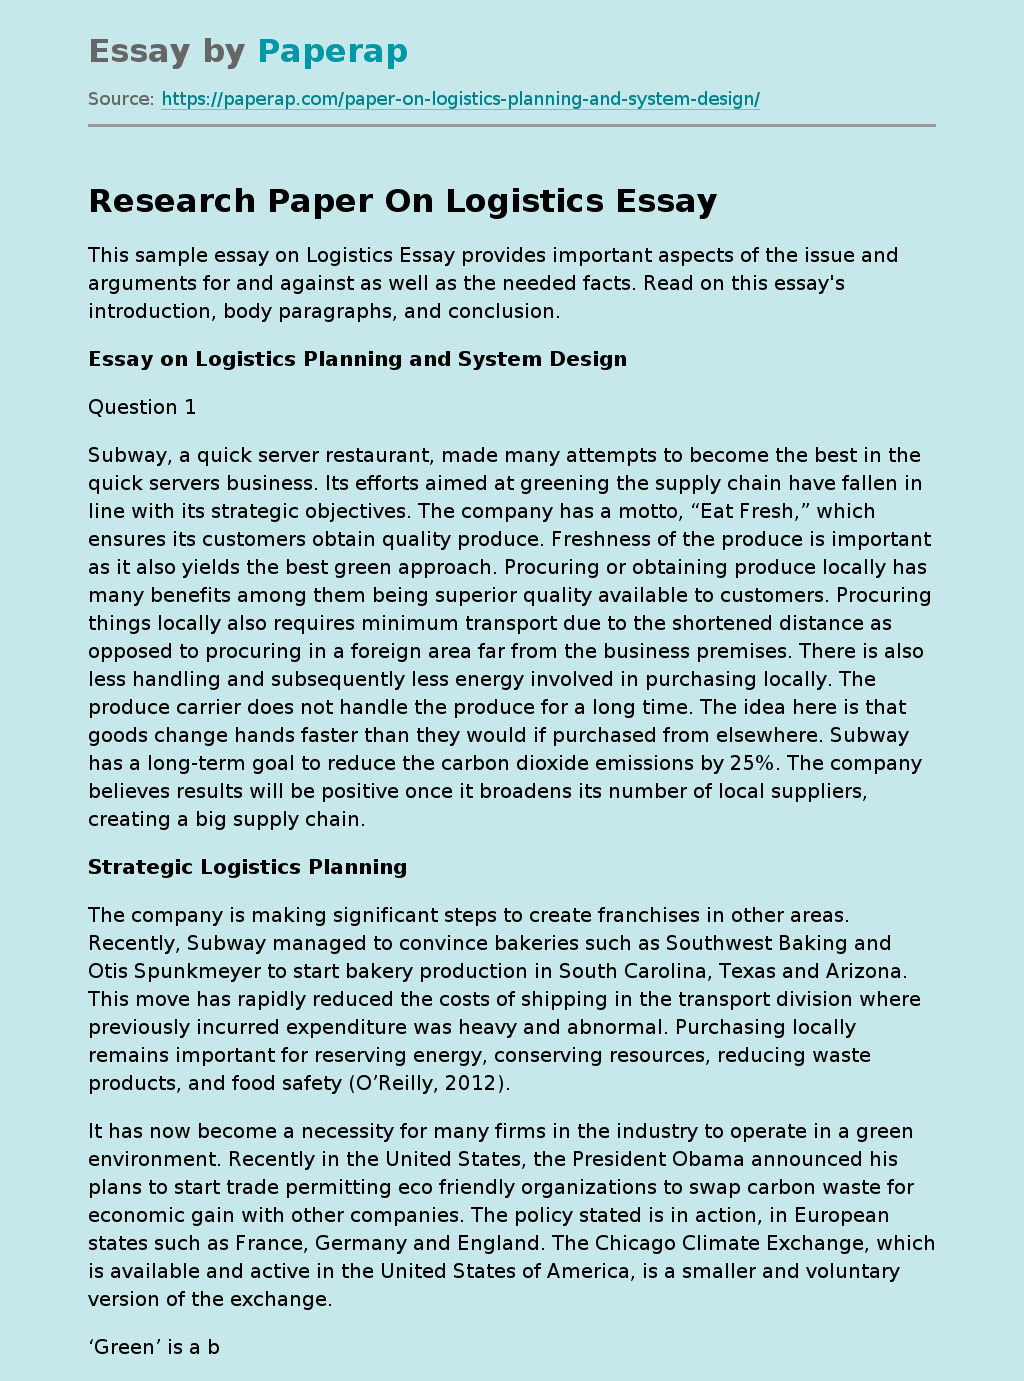 Logistics Planning and System Design